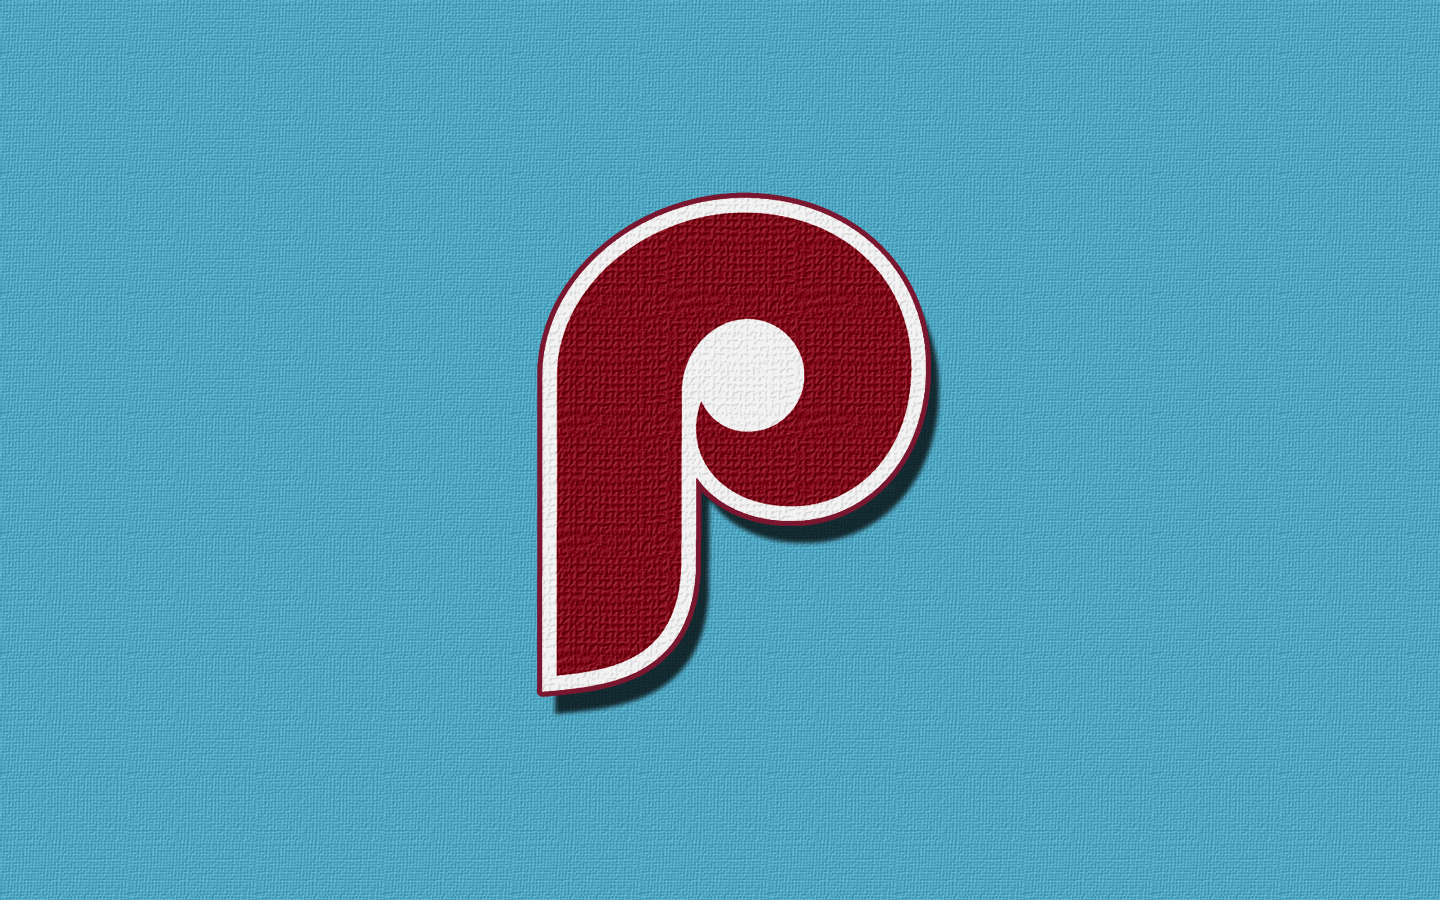 Philadelphia Phillies Logo Wallpapers Group (55+)